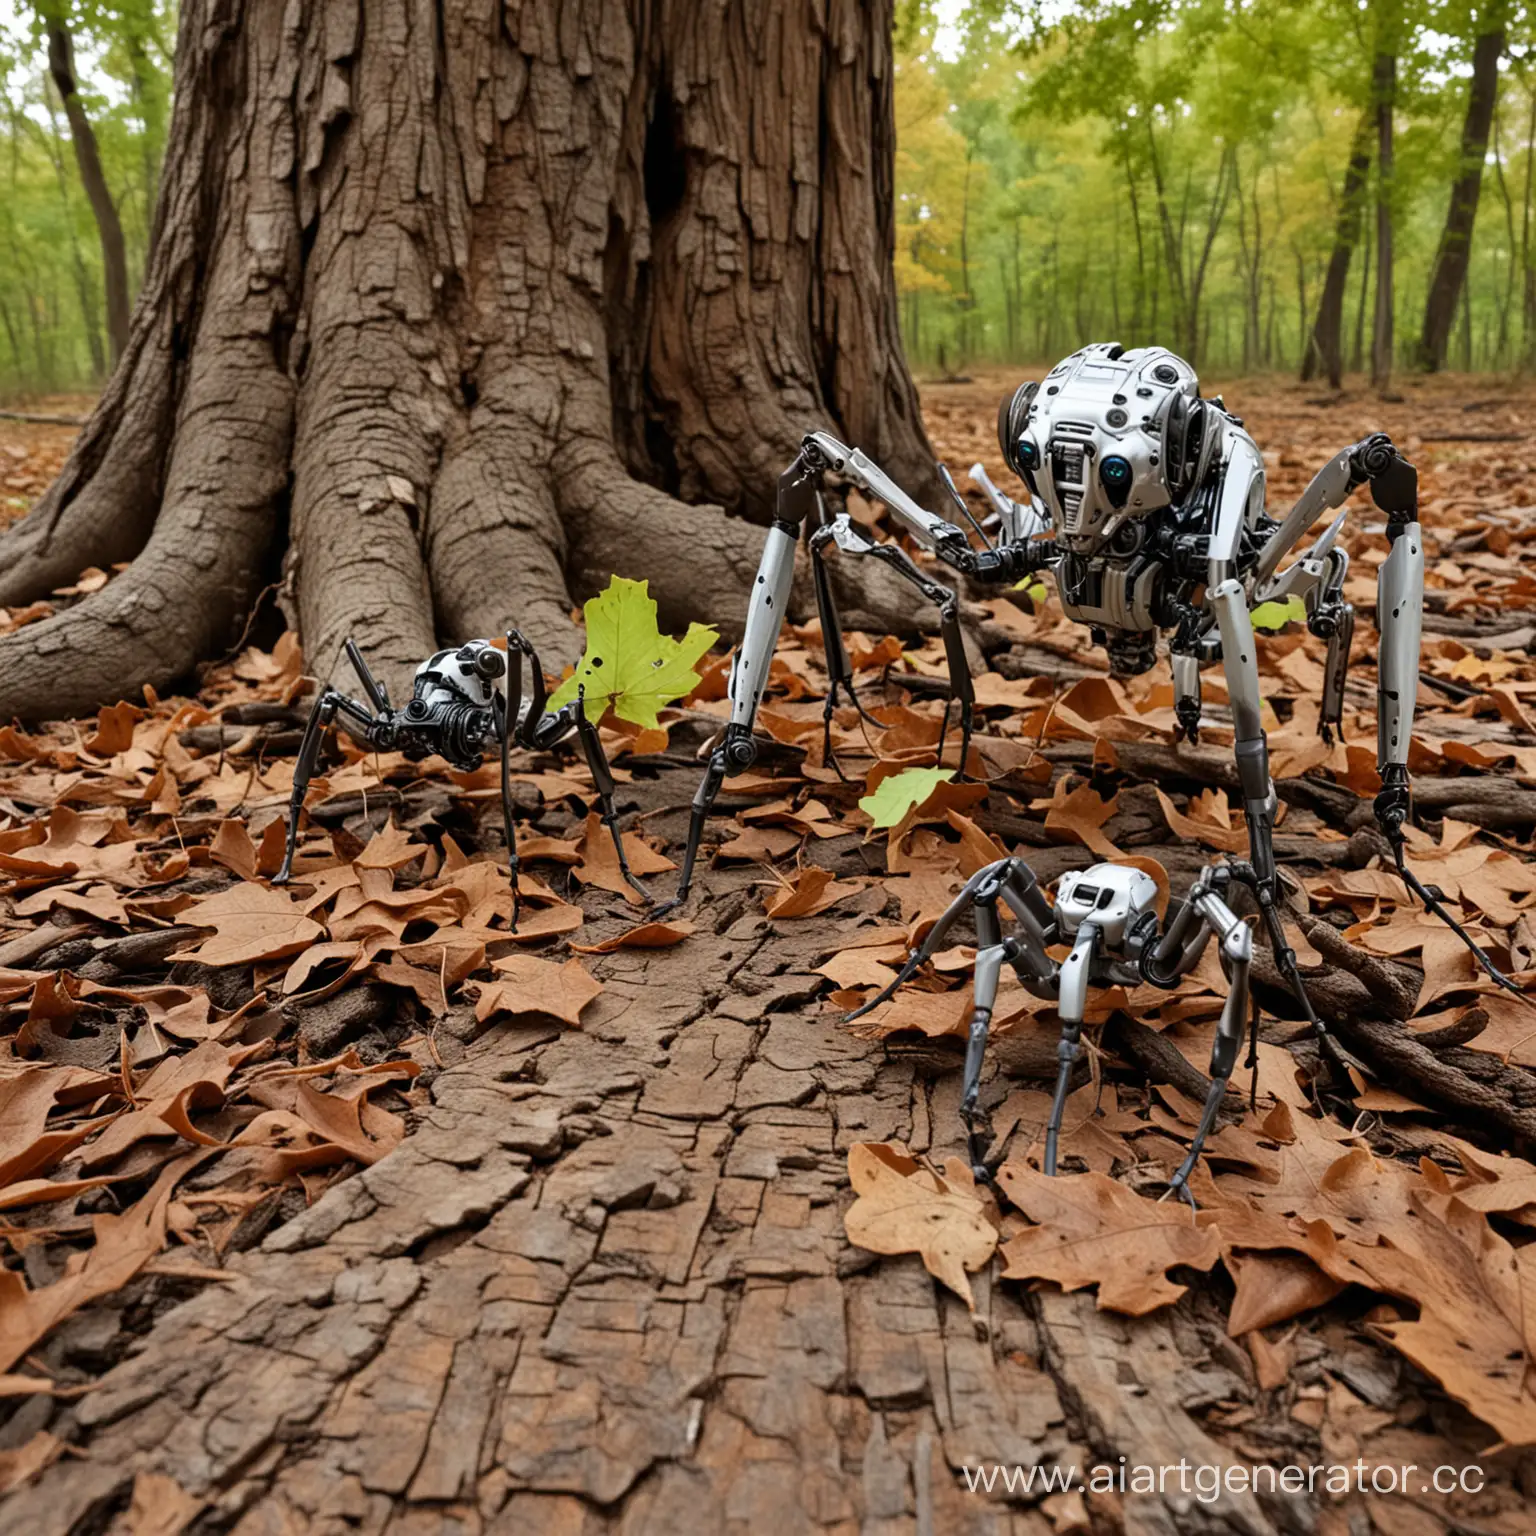 Robotic-Ants-Climbing-Old-Oak-Tree-as-Leaves-Rustle